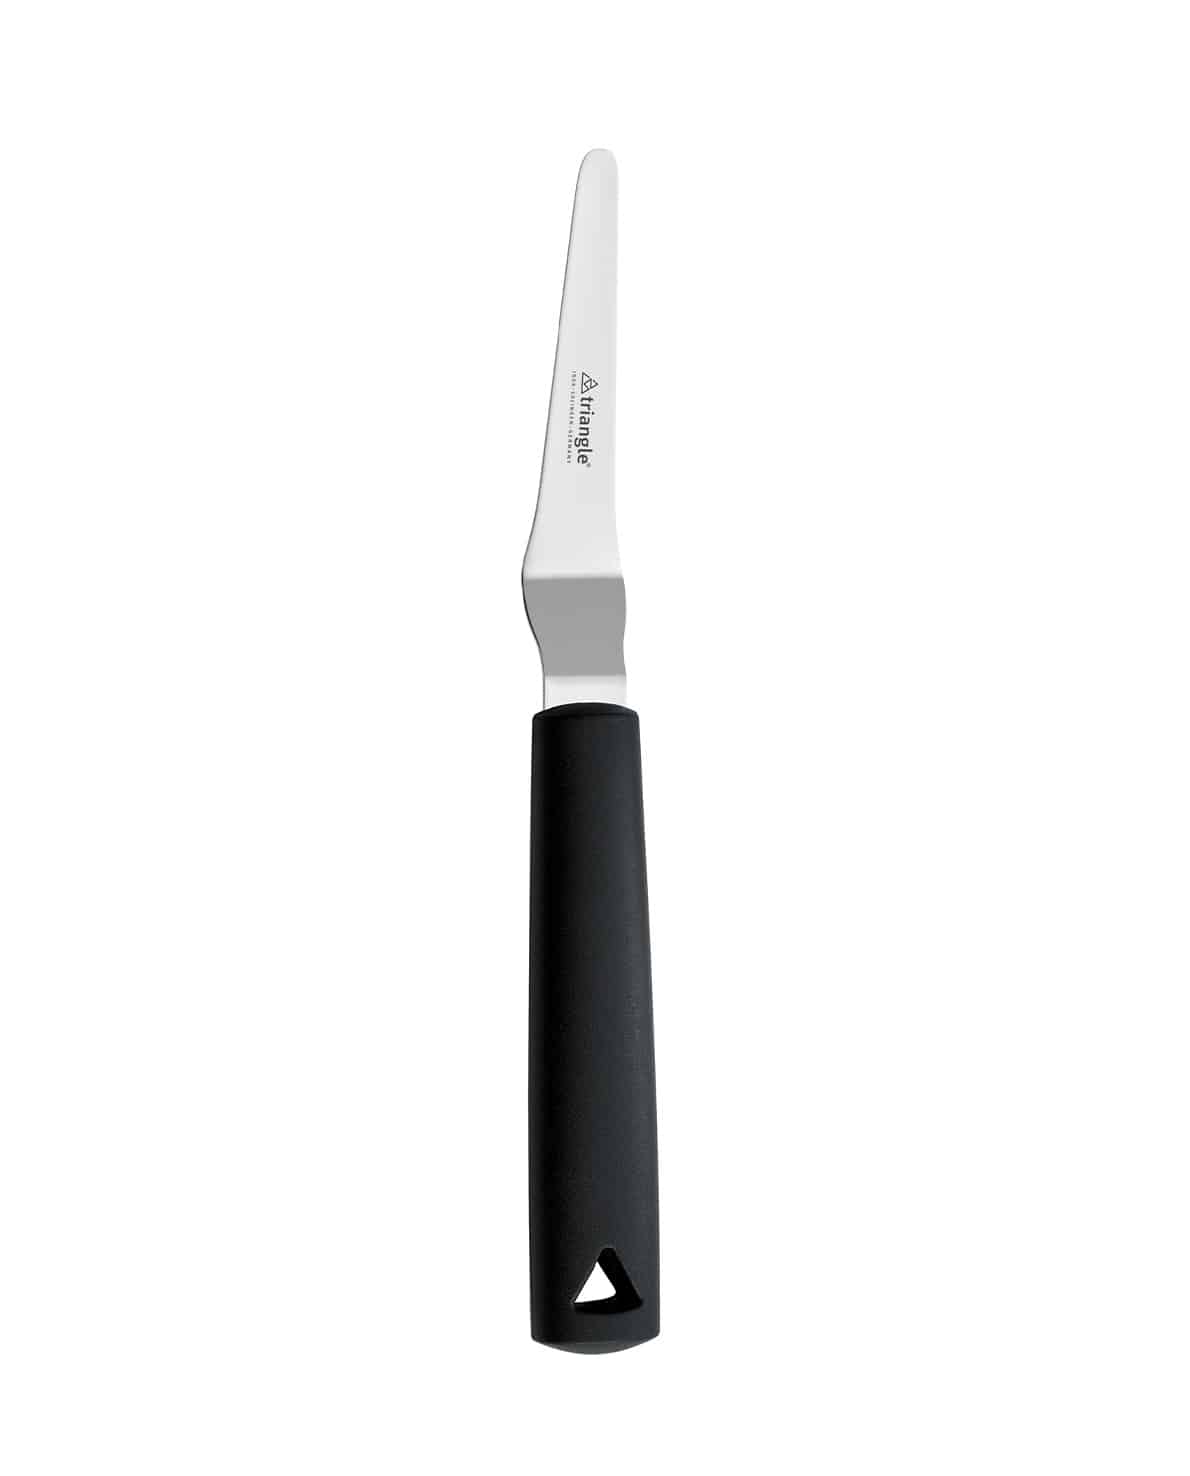 Confiserie spatula spirit, cranked, 7,5 cm - 72 508 08 00